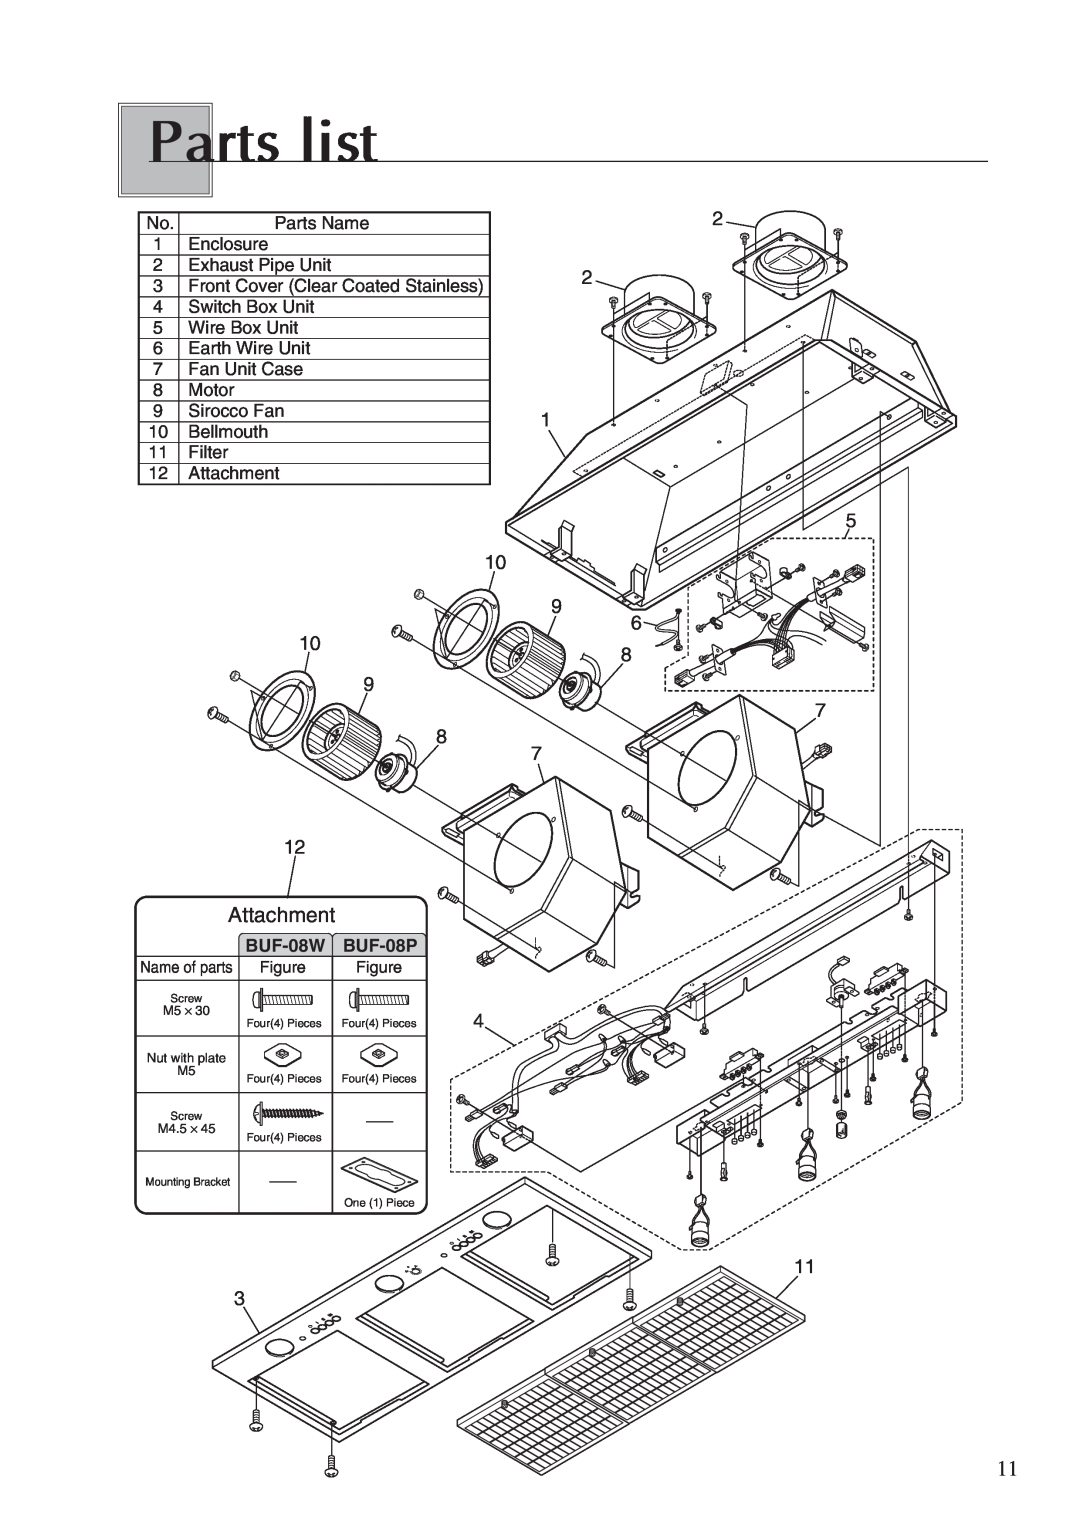 Fujioh operation manual Parts list, 9 8, BUF-08W BUF-08P 